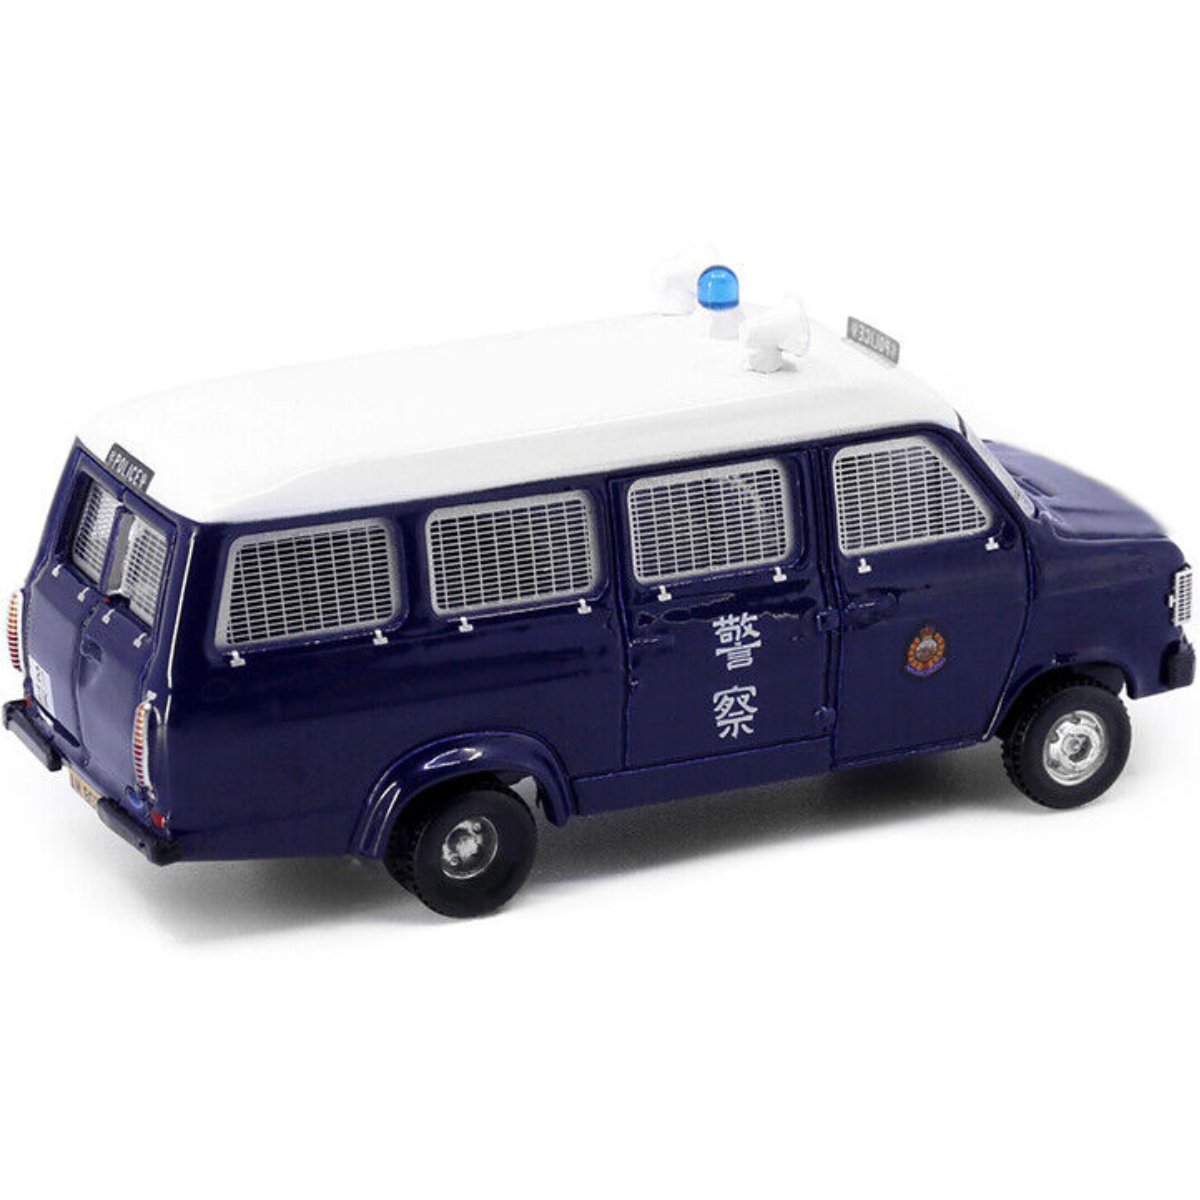 Tiny Models 1980's Police Van - Royal Hong Kong Police AM78073 (1:76 Scale) - Phillips Hobbies